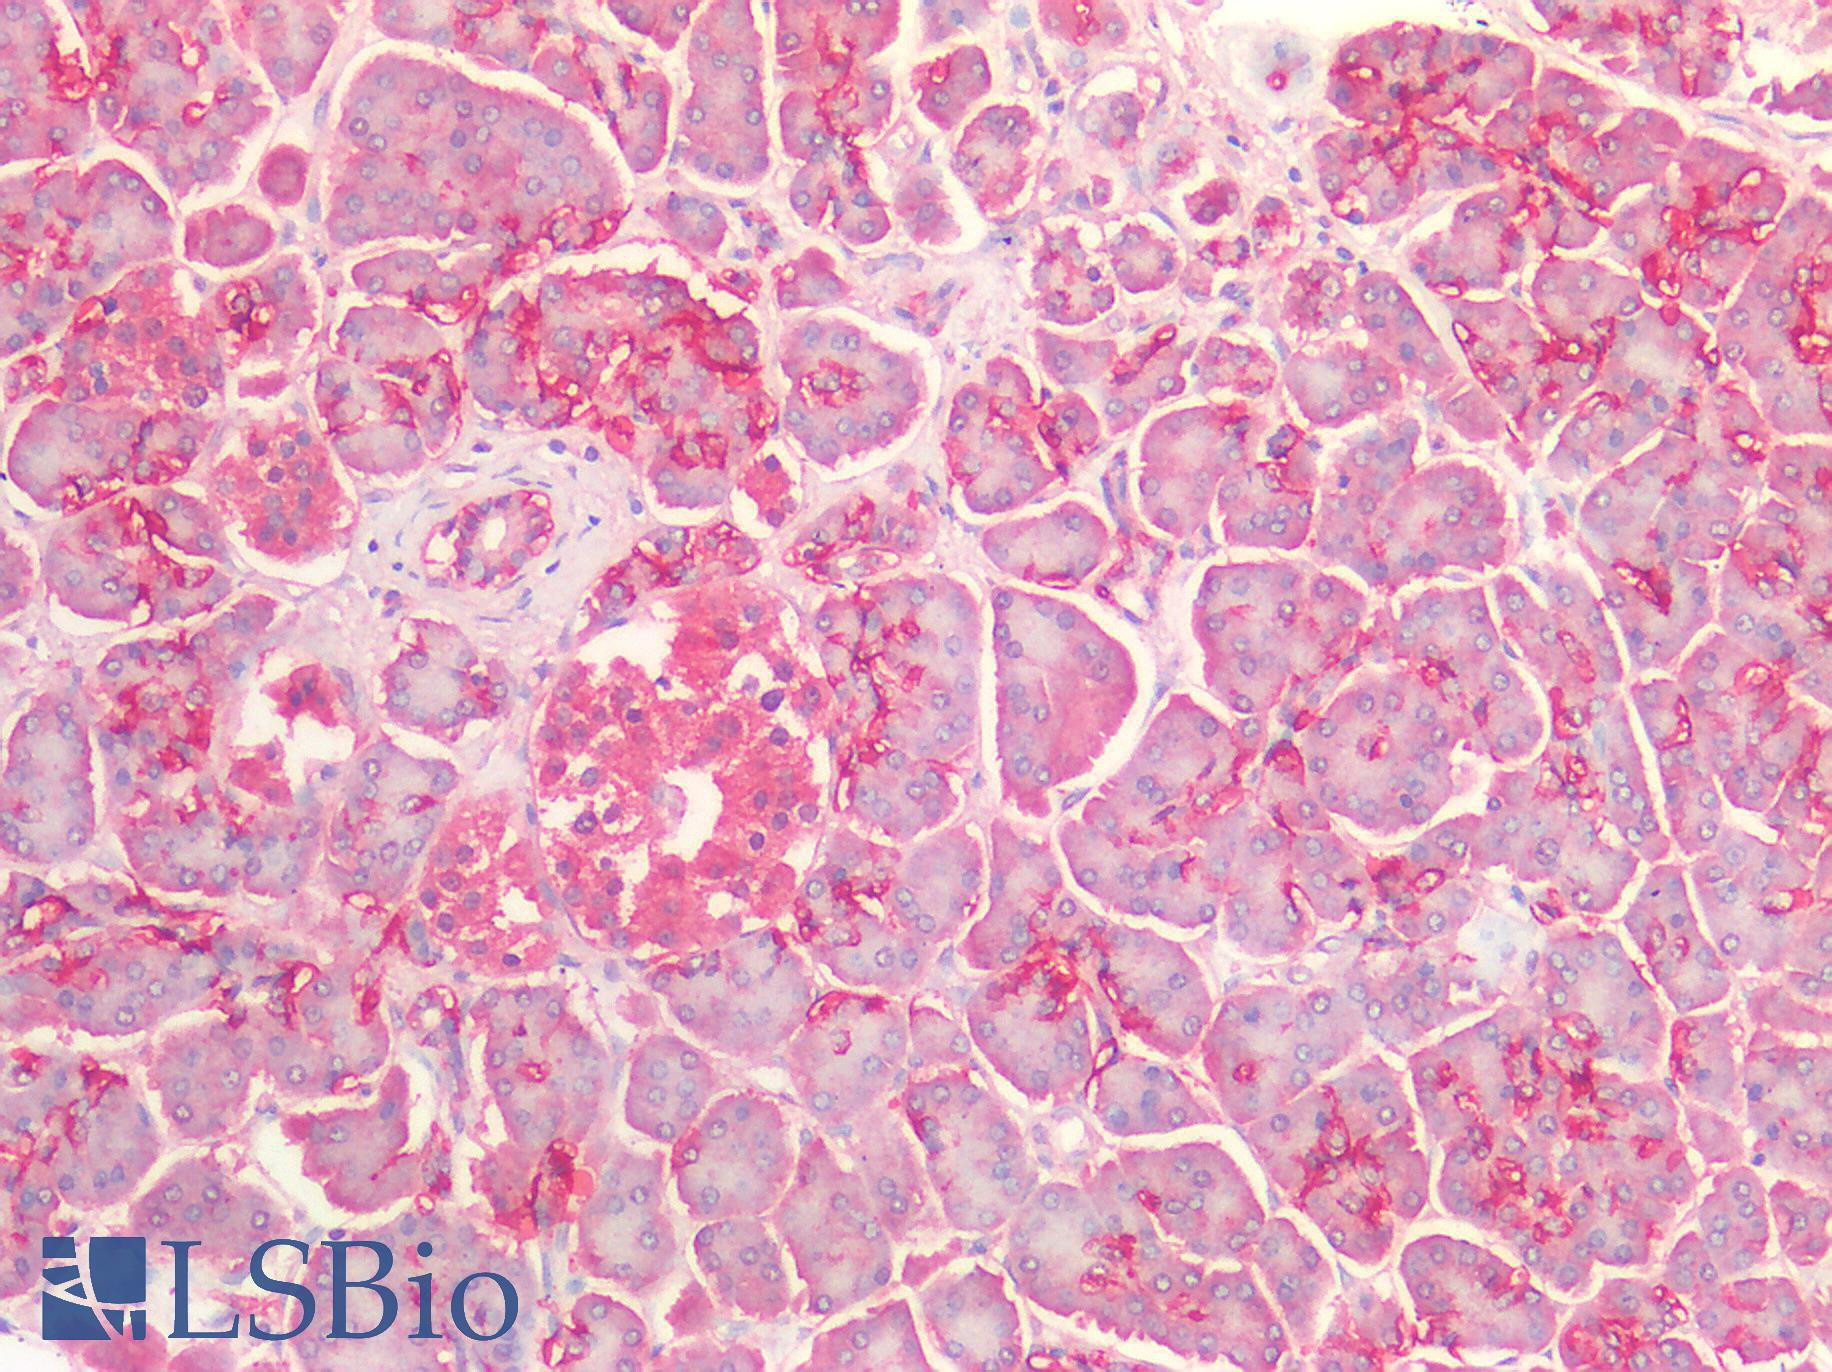 TTR / Transthyretin Antibody - Human Pancreas: Formalin-Fixed, Paraffin-Embedded (FFPE)